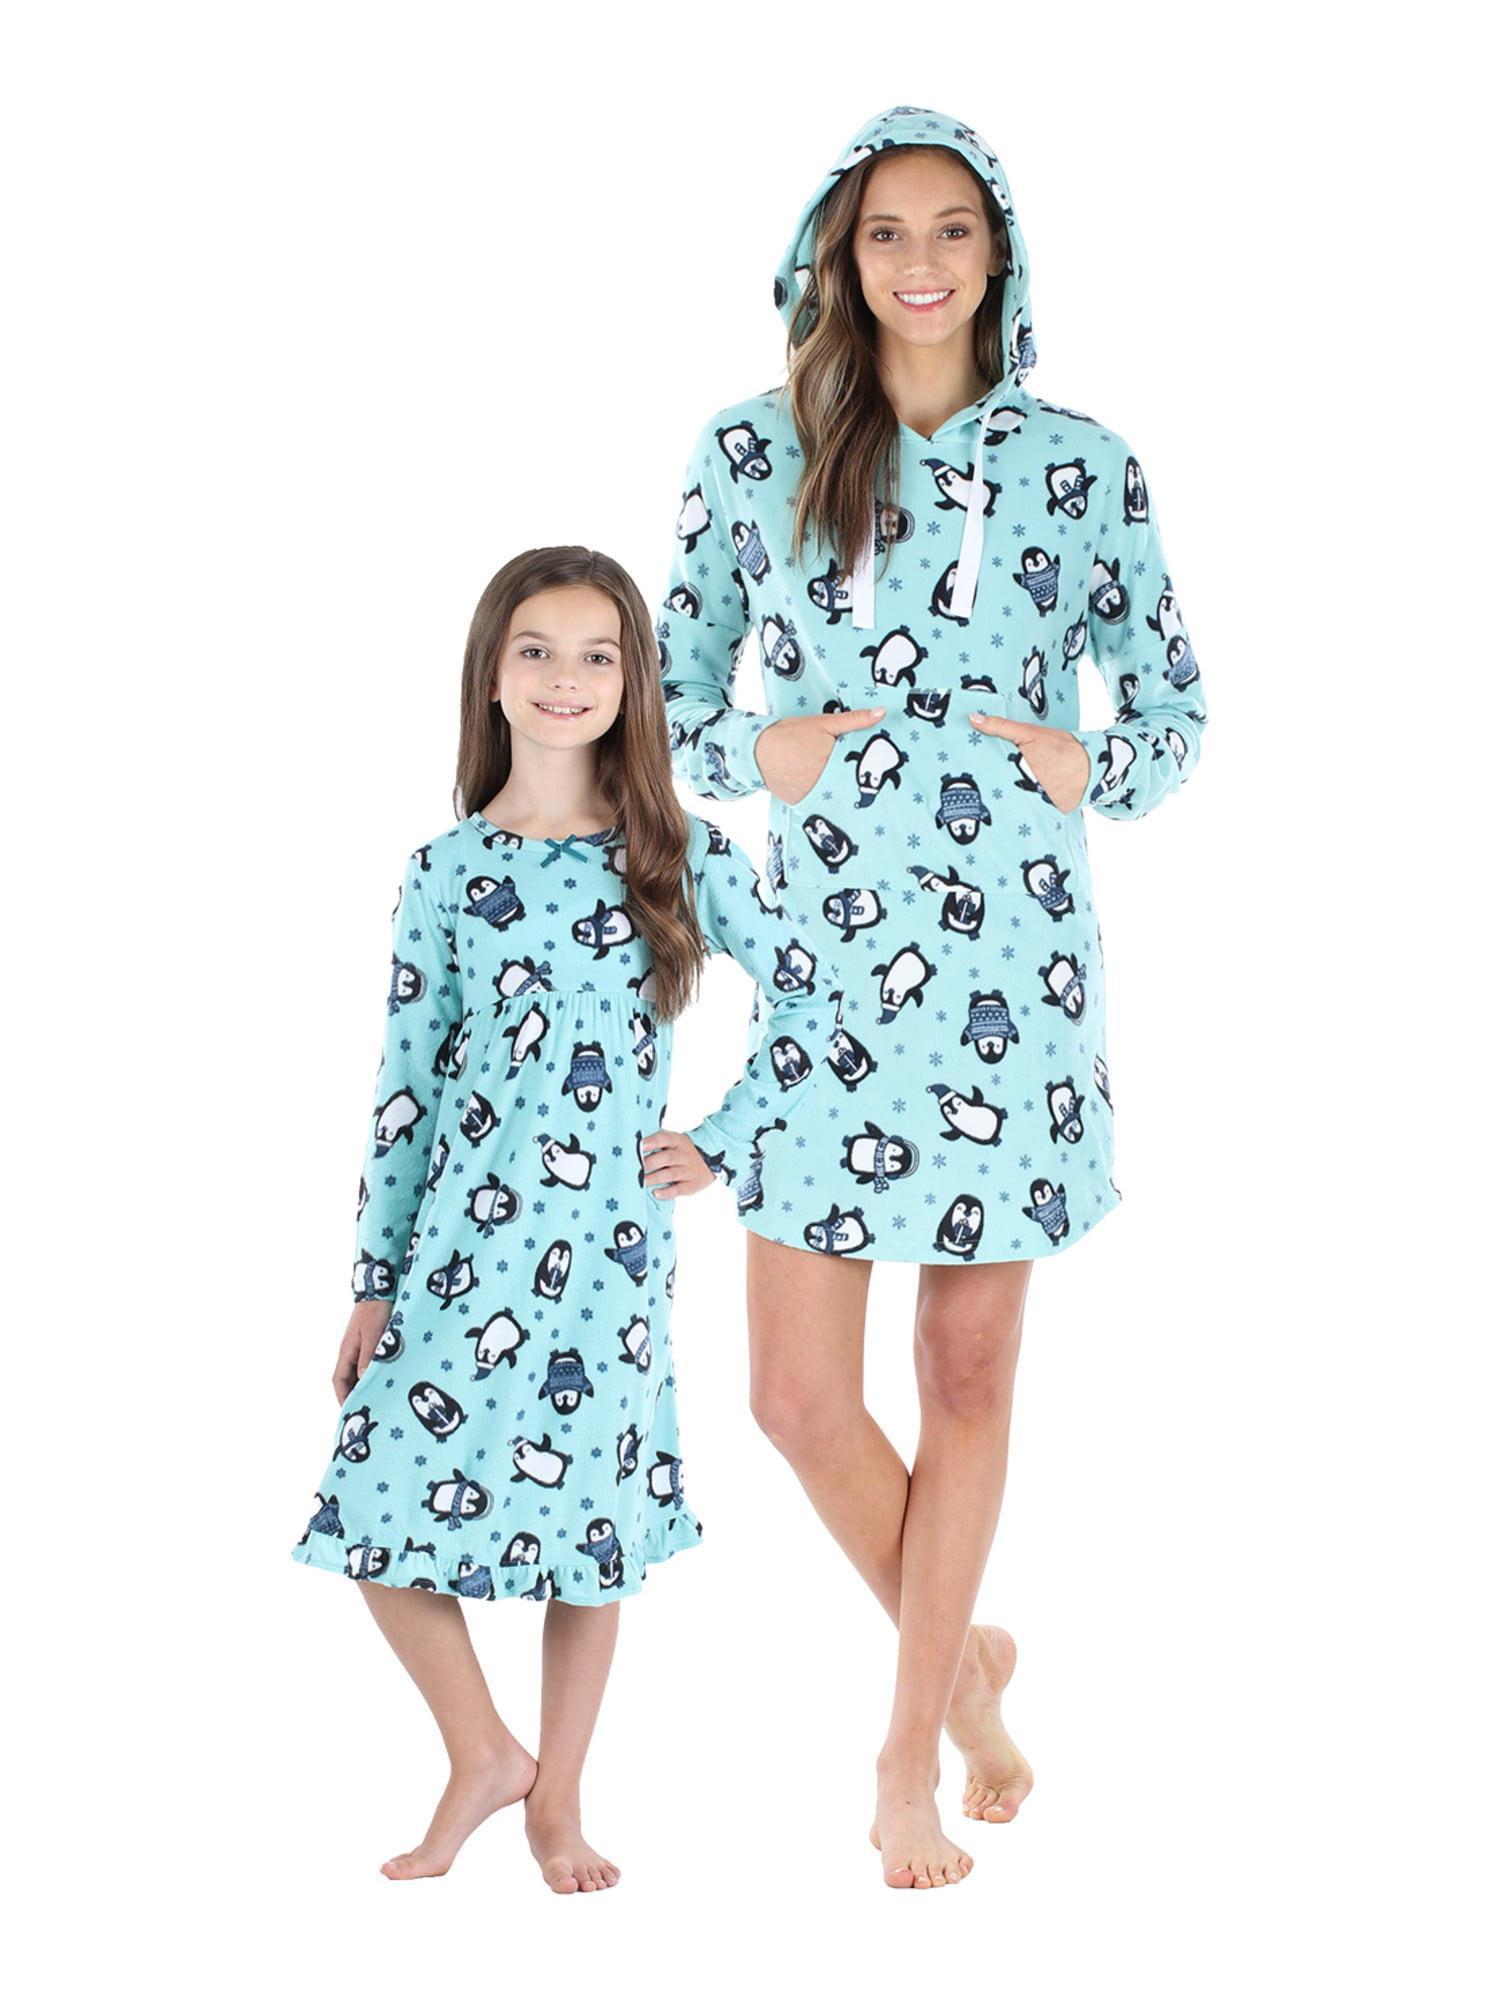 Boys Fleece Character Onesie Pyjamas Kids Childrens All in One Sleepsuit PJs Size 18 Months 2 3 4 5 6 7 8 9 10 Years 